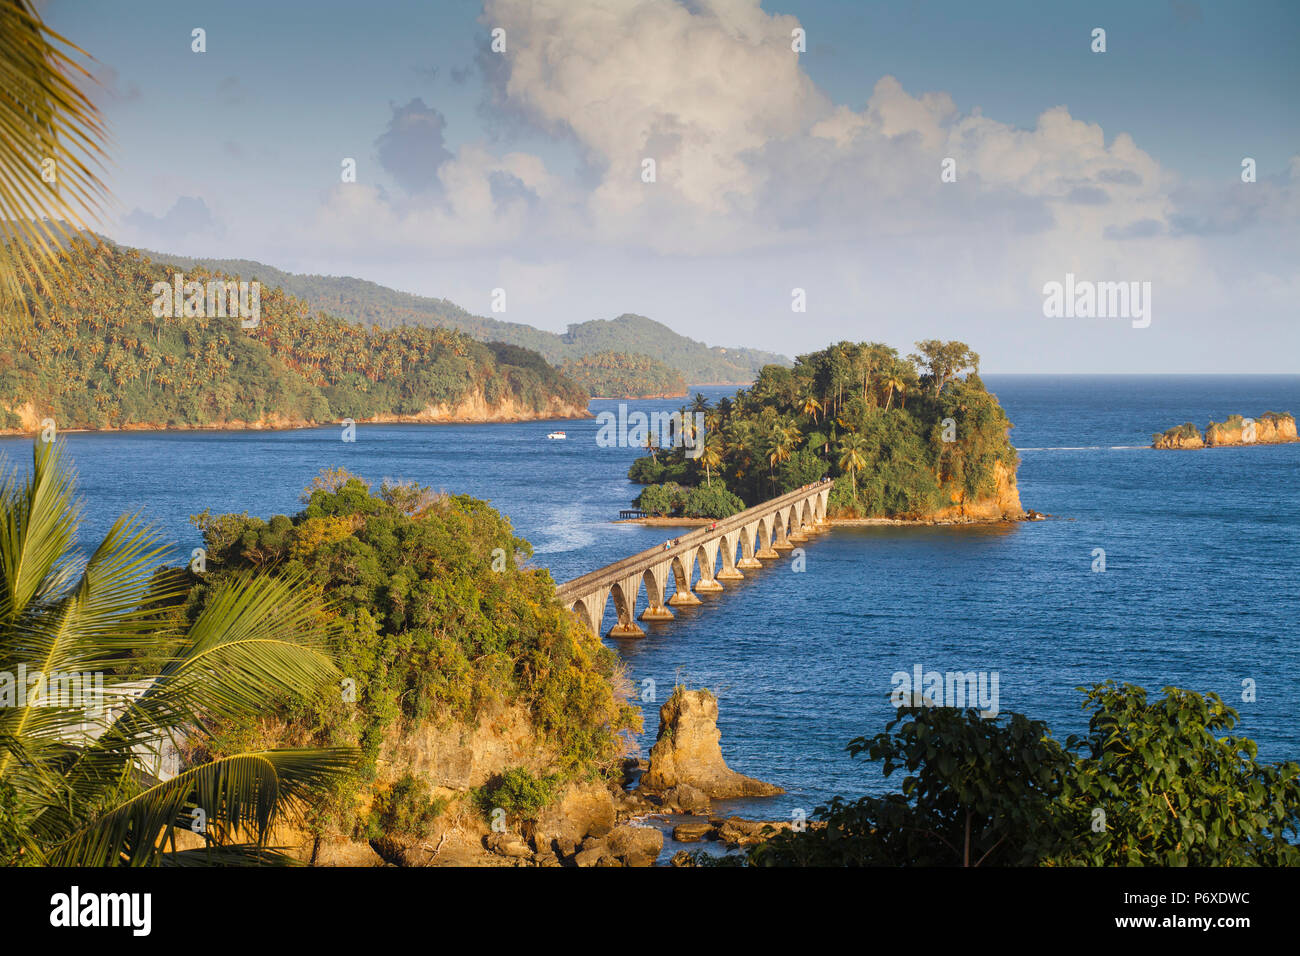 Dominikanische Republik, Östliche Halbinsel de Samana, Semana, Blick auf den Hafen und Los Puentes - berühmte Brücke nach Nirgendwo Stockfoto